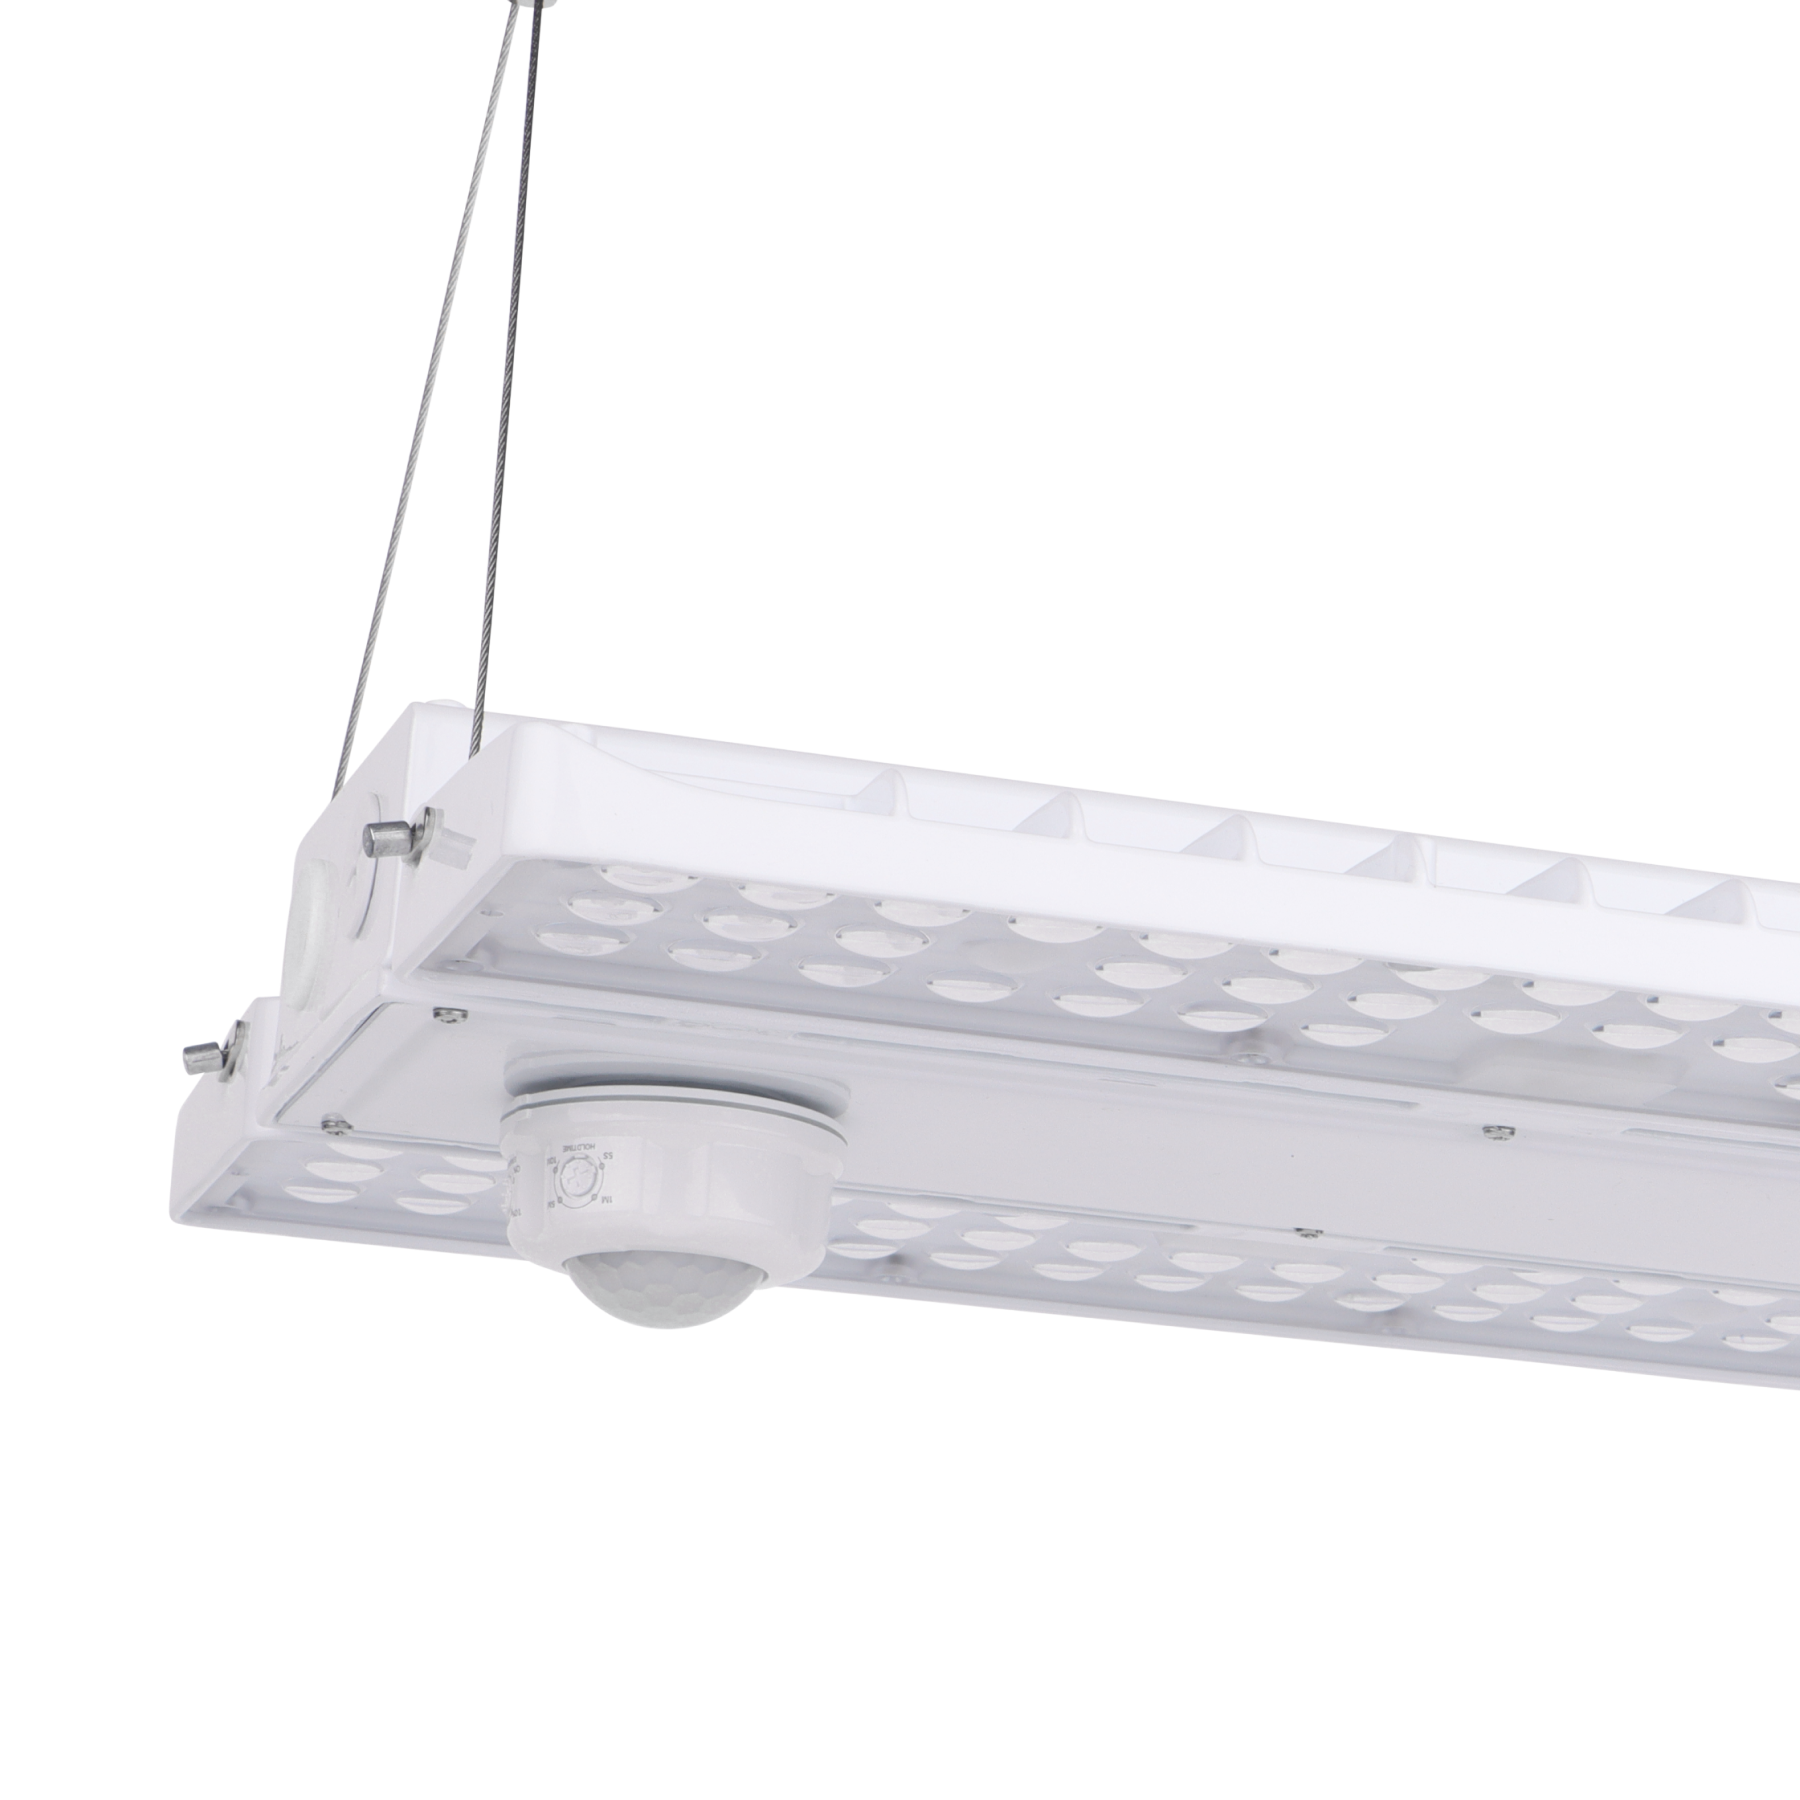 1.7FT LED Linear High Bay Light 240/270/310W Wattage Adjustable - 4000/5000K - 46500Lumens 0-10V Dimmable With sensor base, 277-480VAC Input Voltage - DLC 5.1 Premium, White